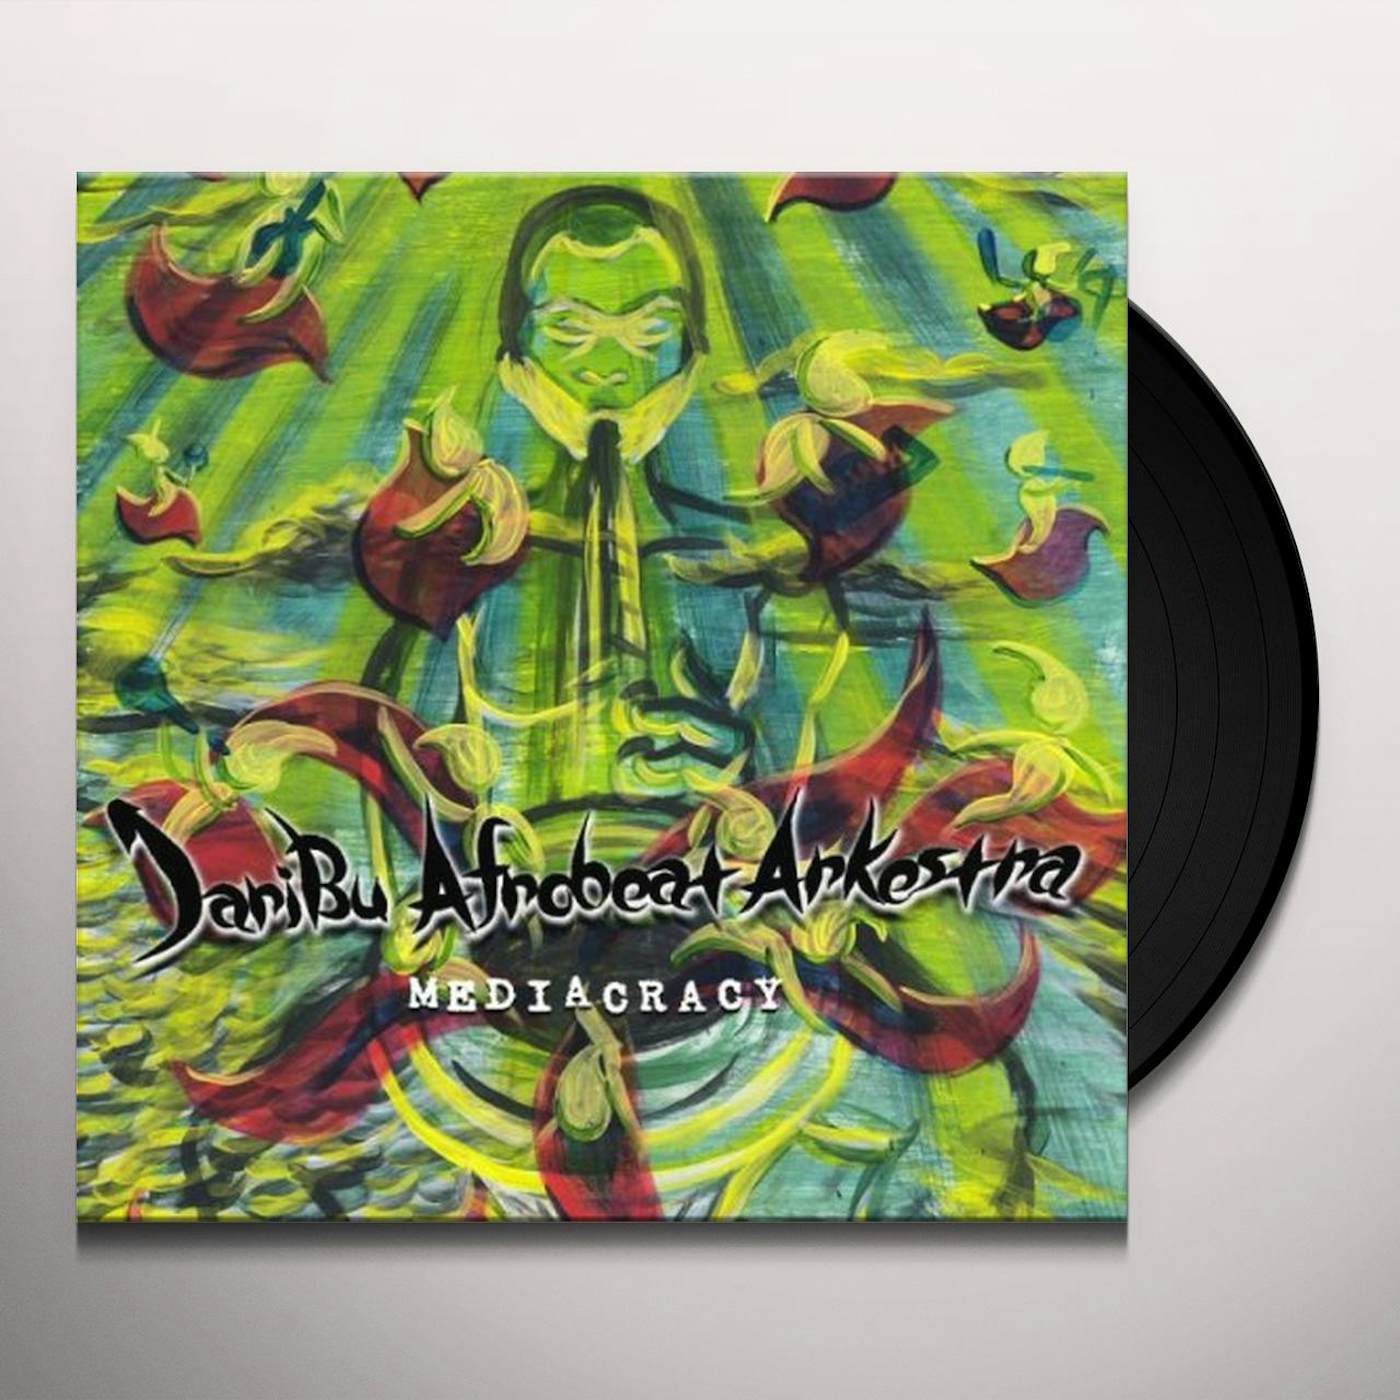 Jaribu Afrobeat Arkestra MEDIACRACY Vinyl Record - Limited Edition